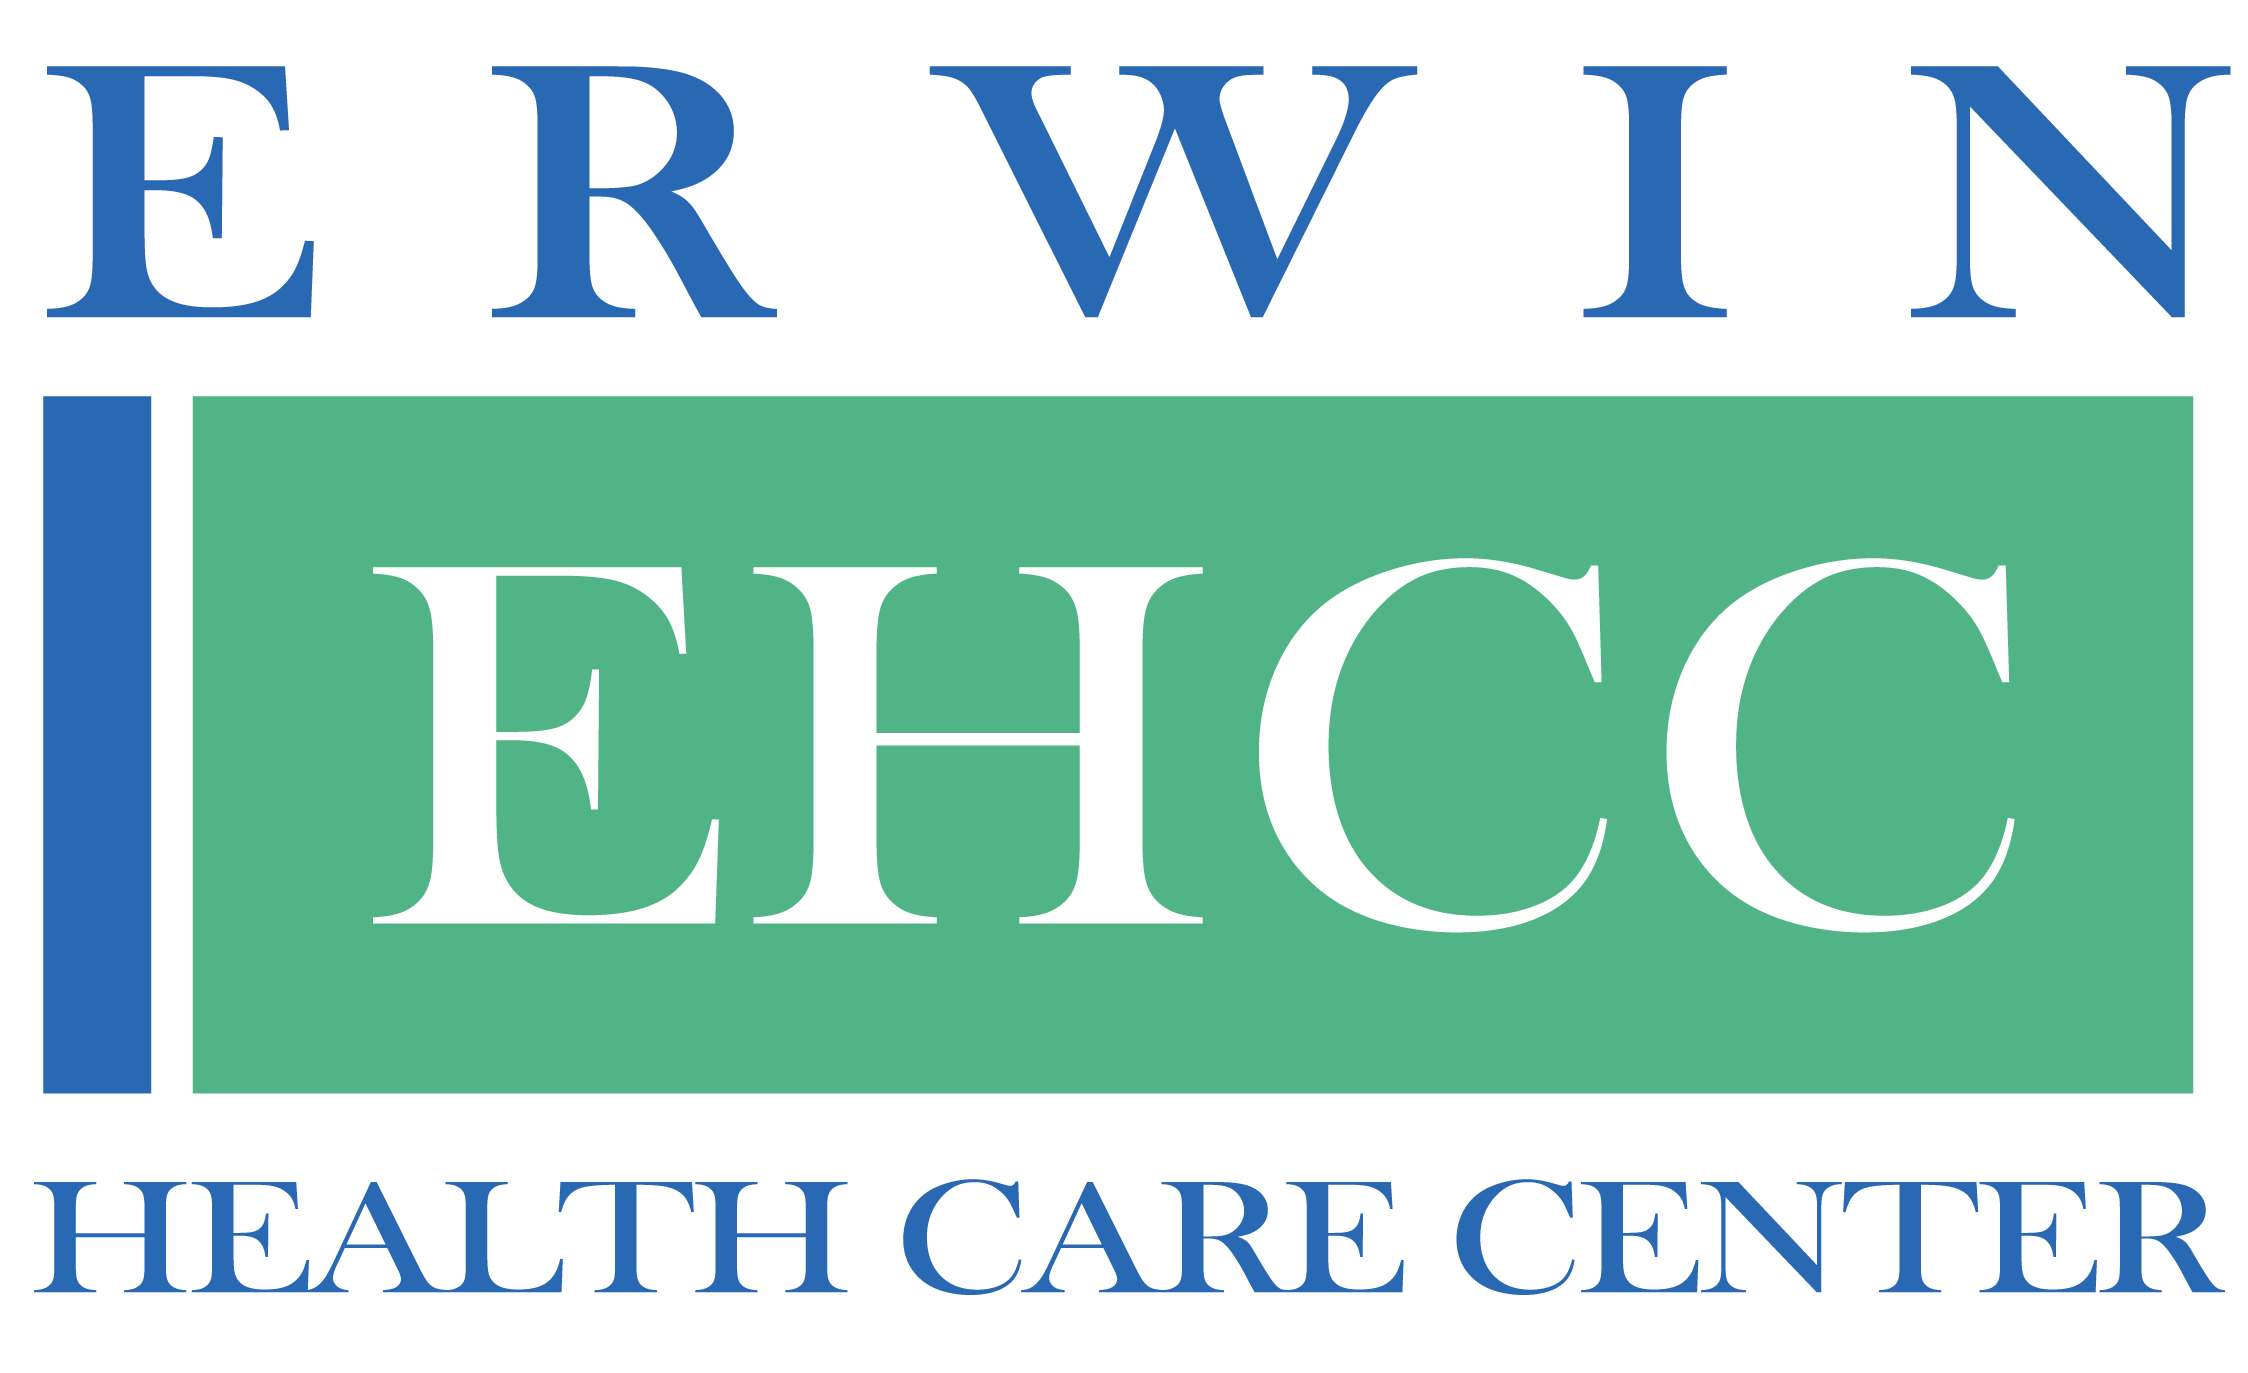 Erwin Health Care Center